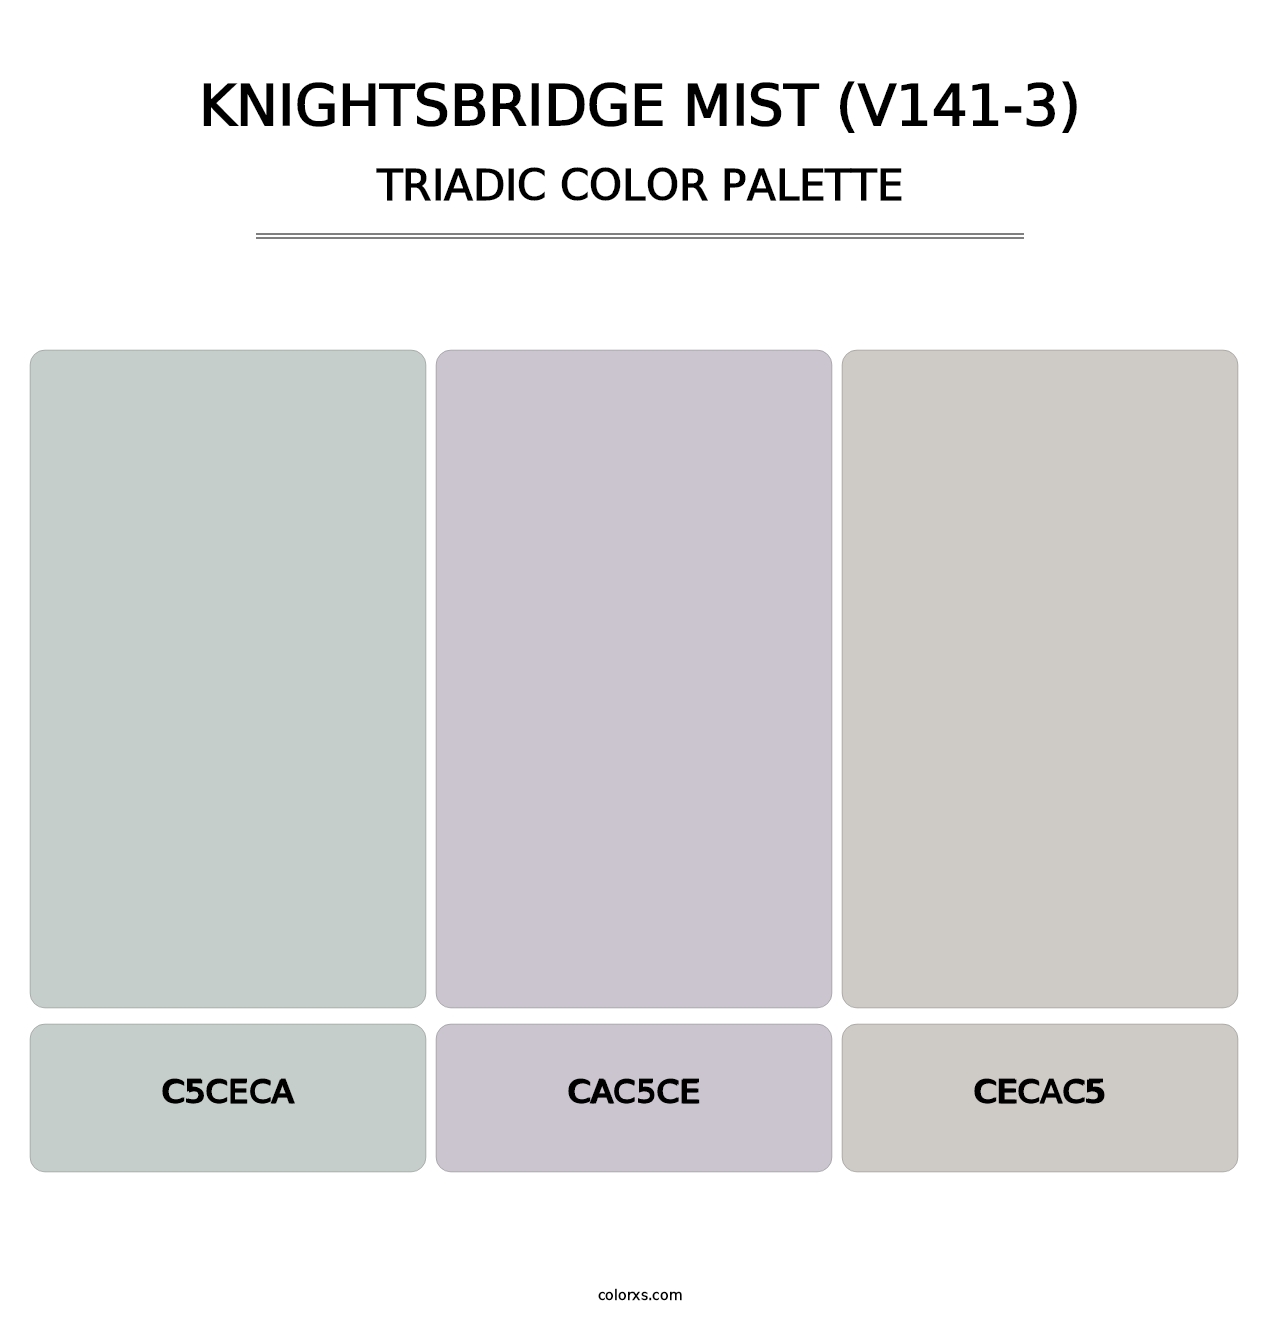 Knightsbridge Mist (V141-3) - Triadic Color Palette